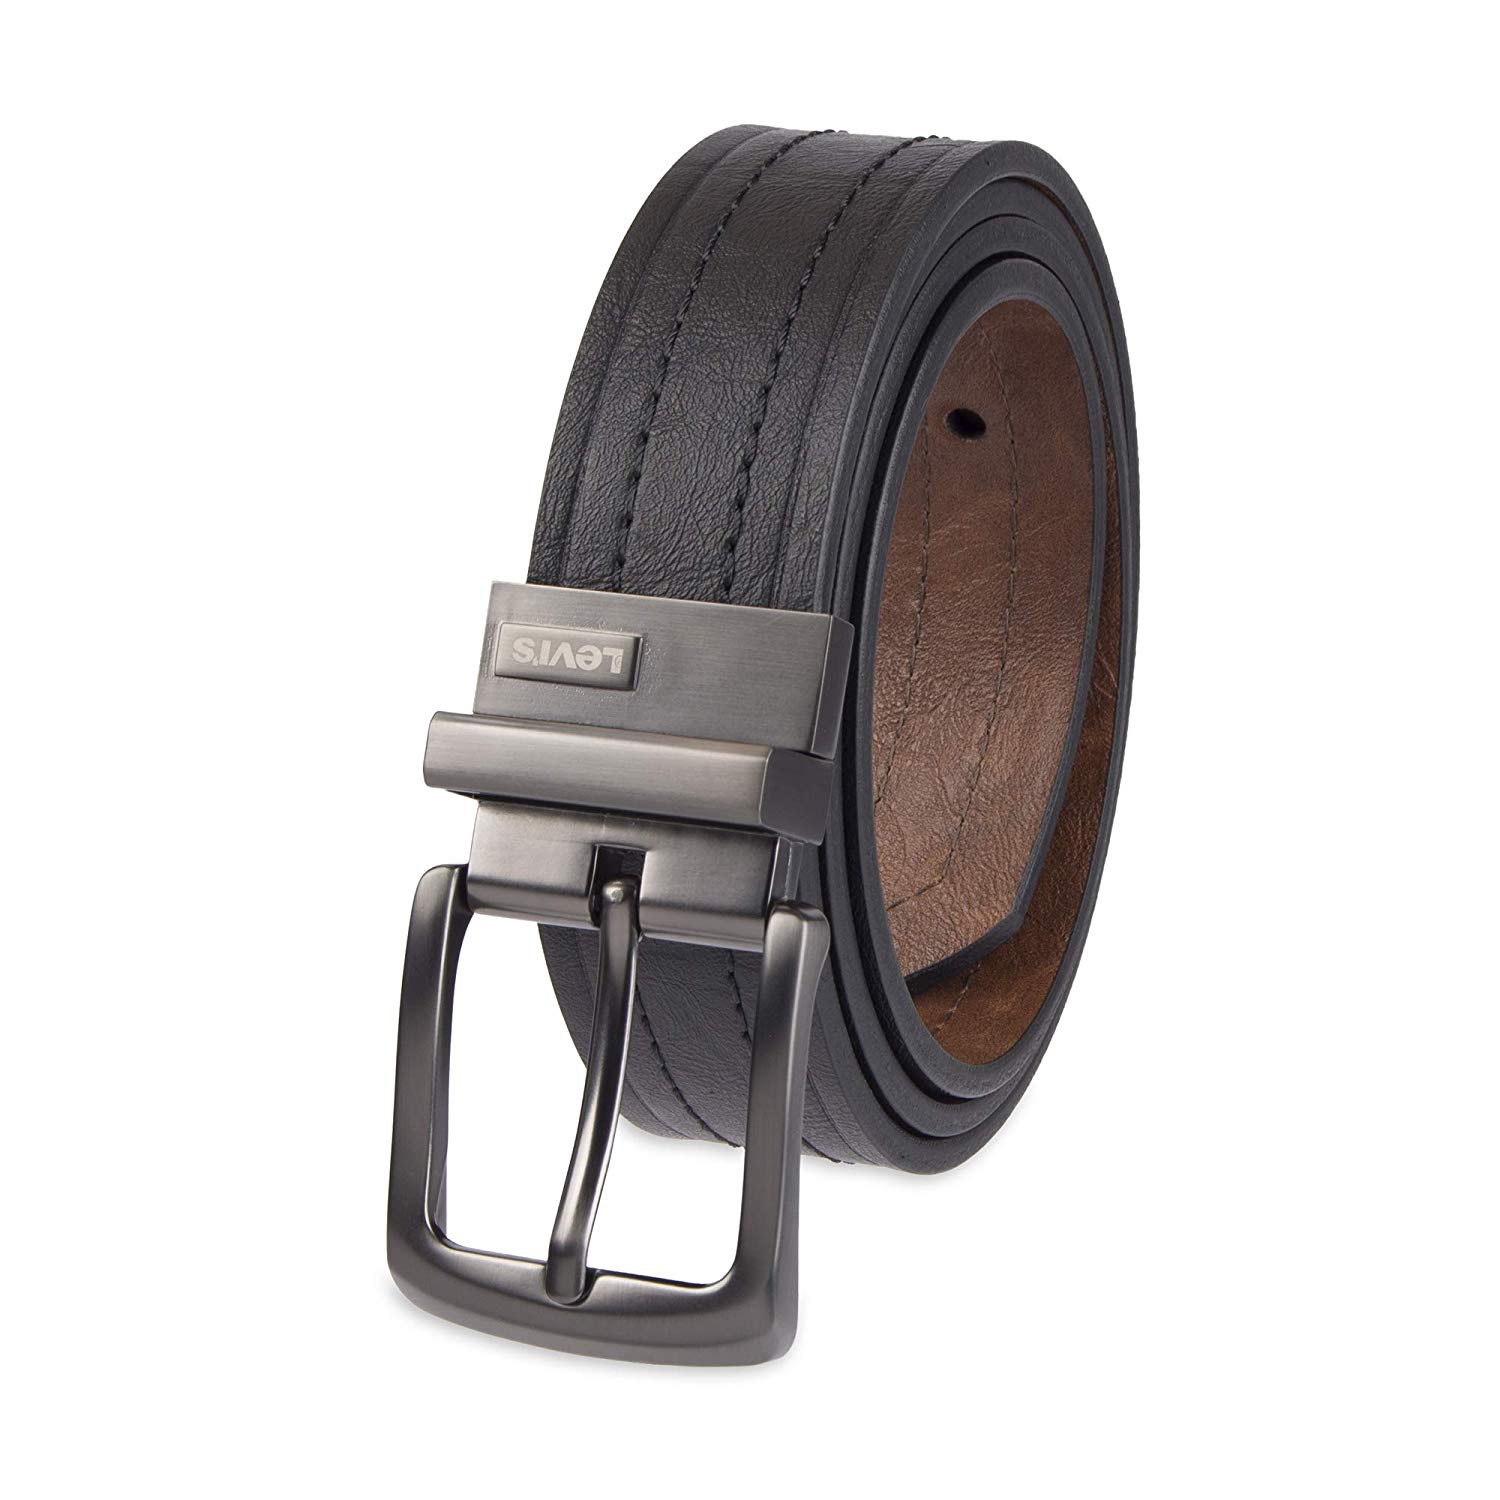 Levi's Reversible Leather Belt Double Sided Strap Silver Buckle Men's Belt  11LV2223 206 Black Brown xách tay chính hãng giá rẻ bảo hành dài - Dây lưng  - Senmix